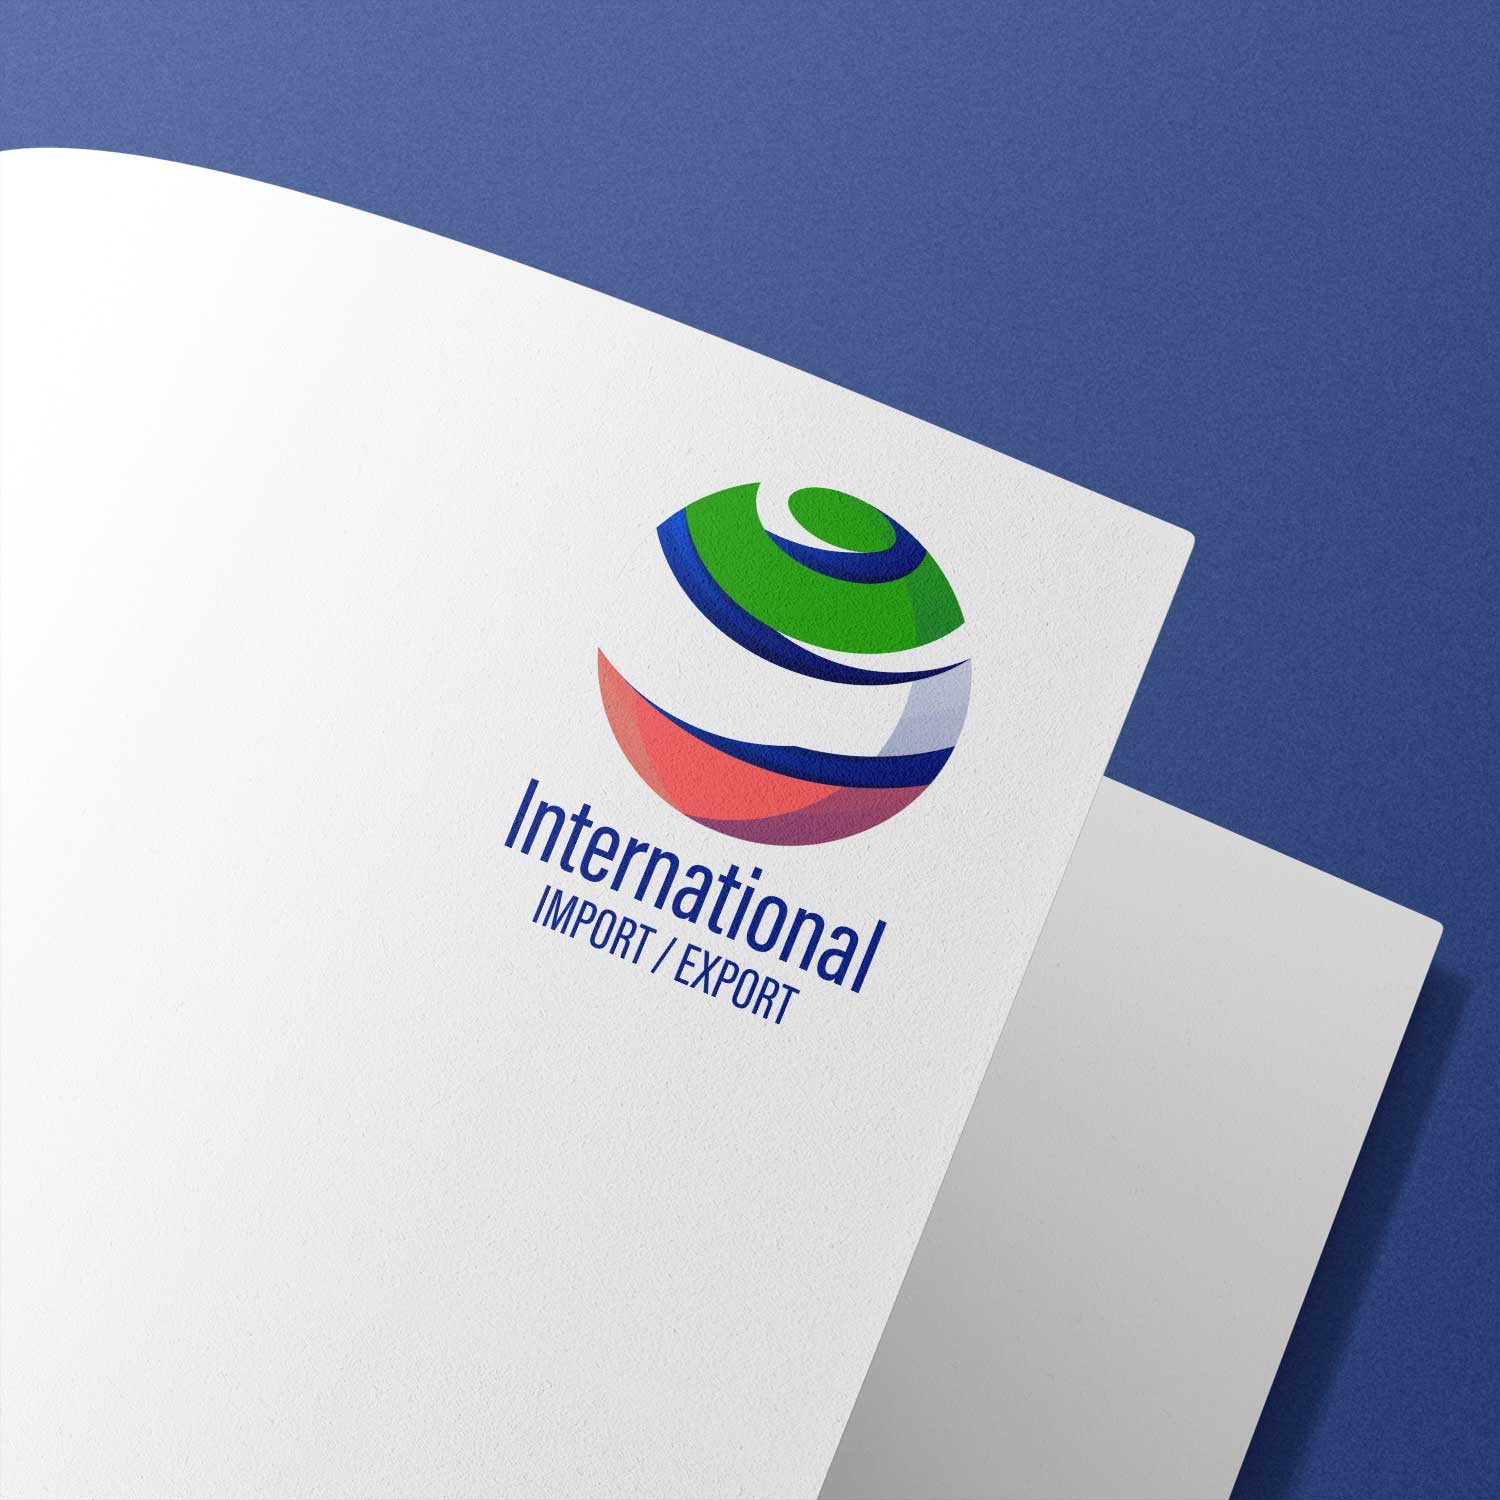 international-import-export-Logo-Mockup